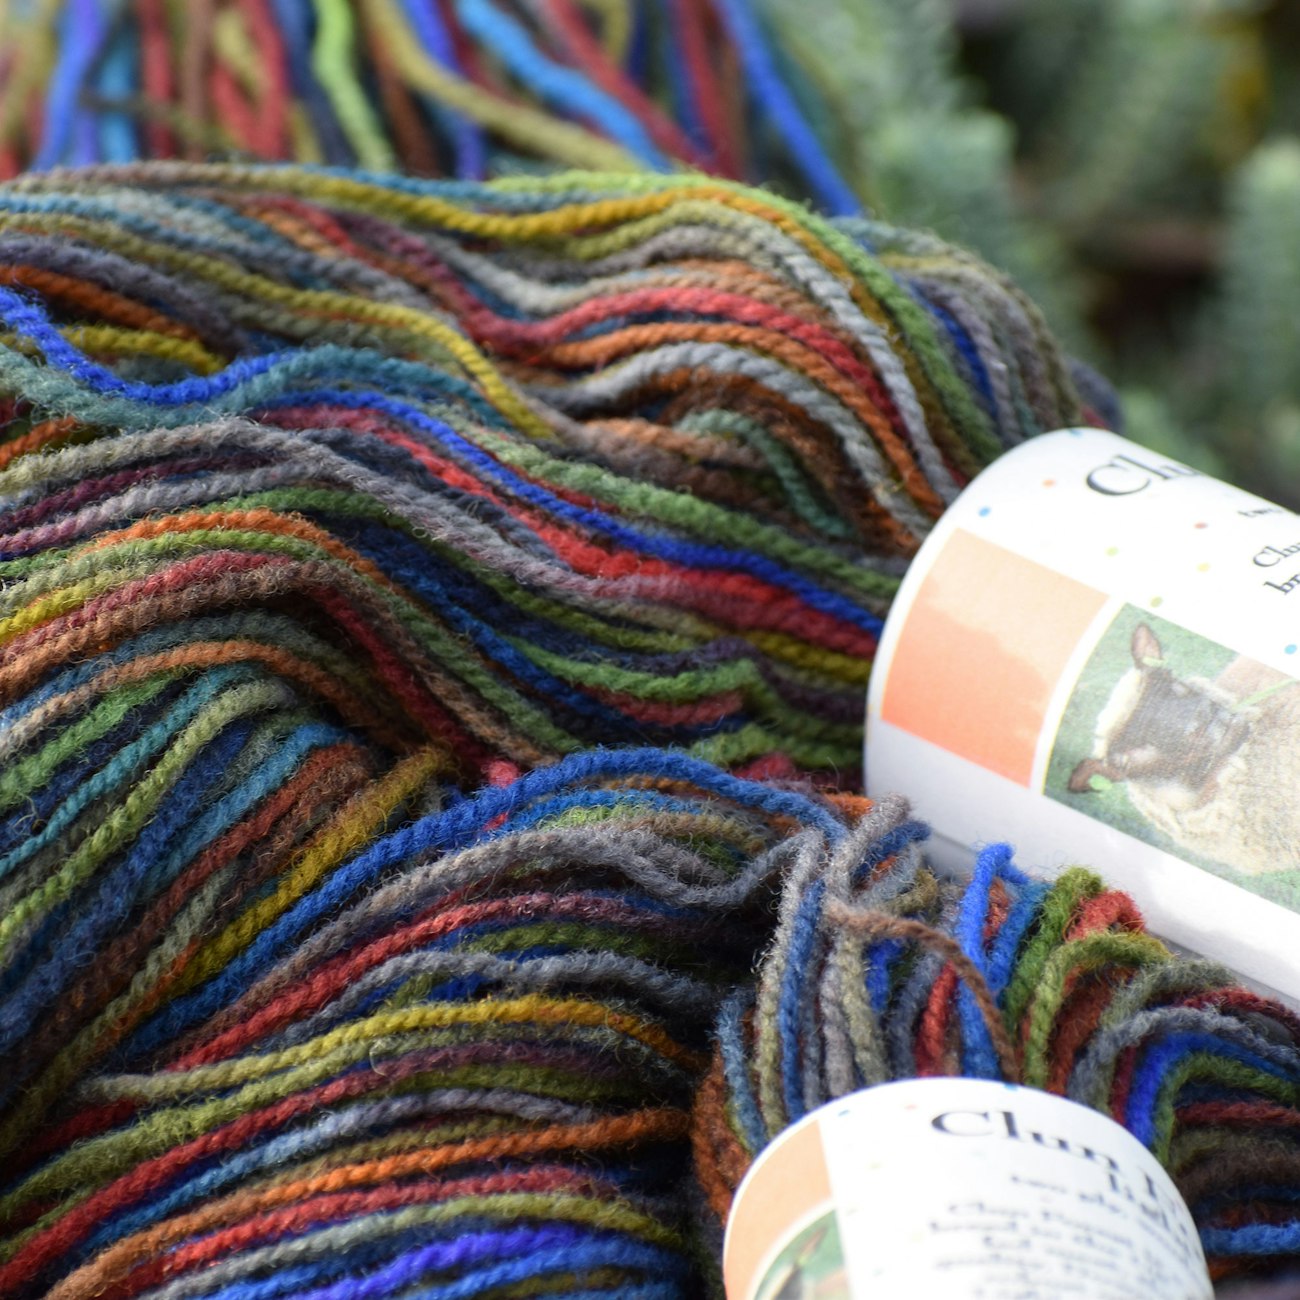 Multicolored hank of yarn